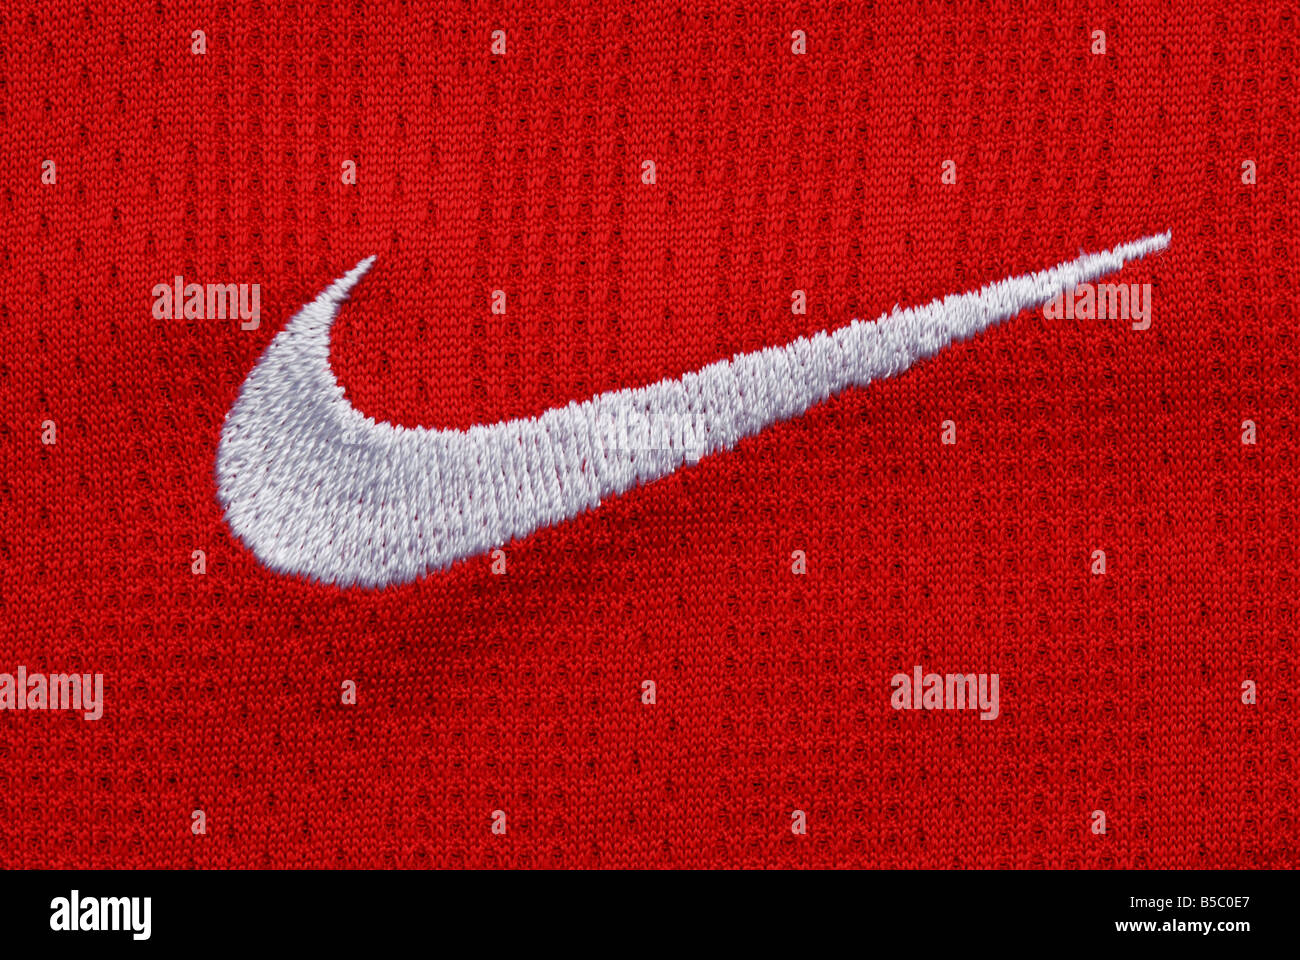 Nike tick -Fotos und -Bildmaterial in hoher Auflösung – Alamy